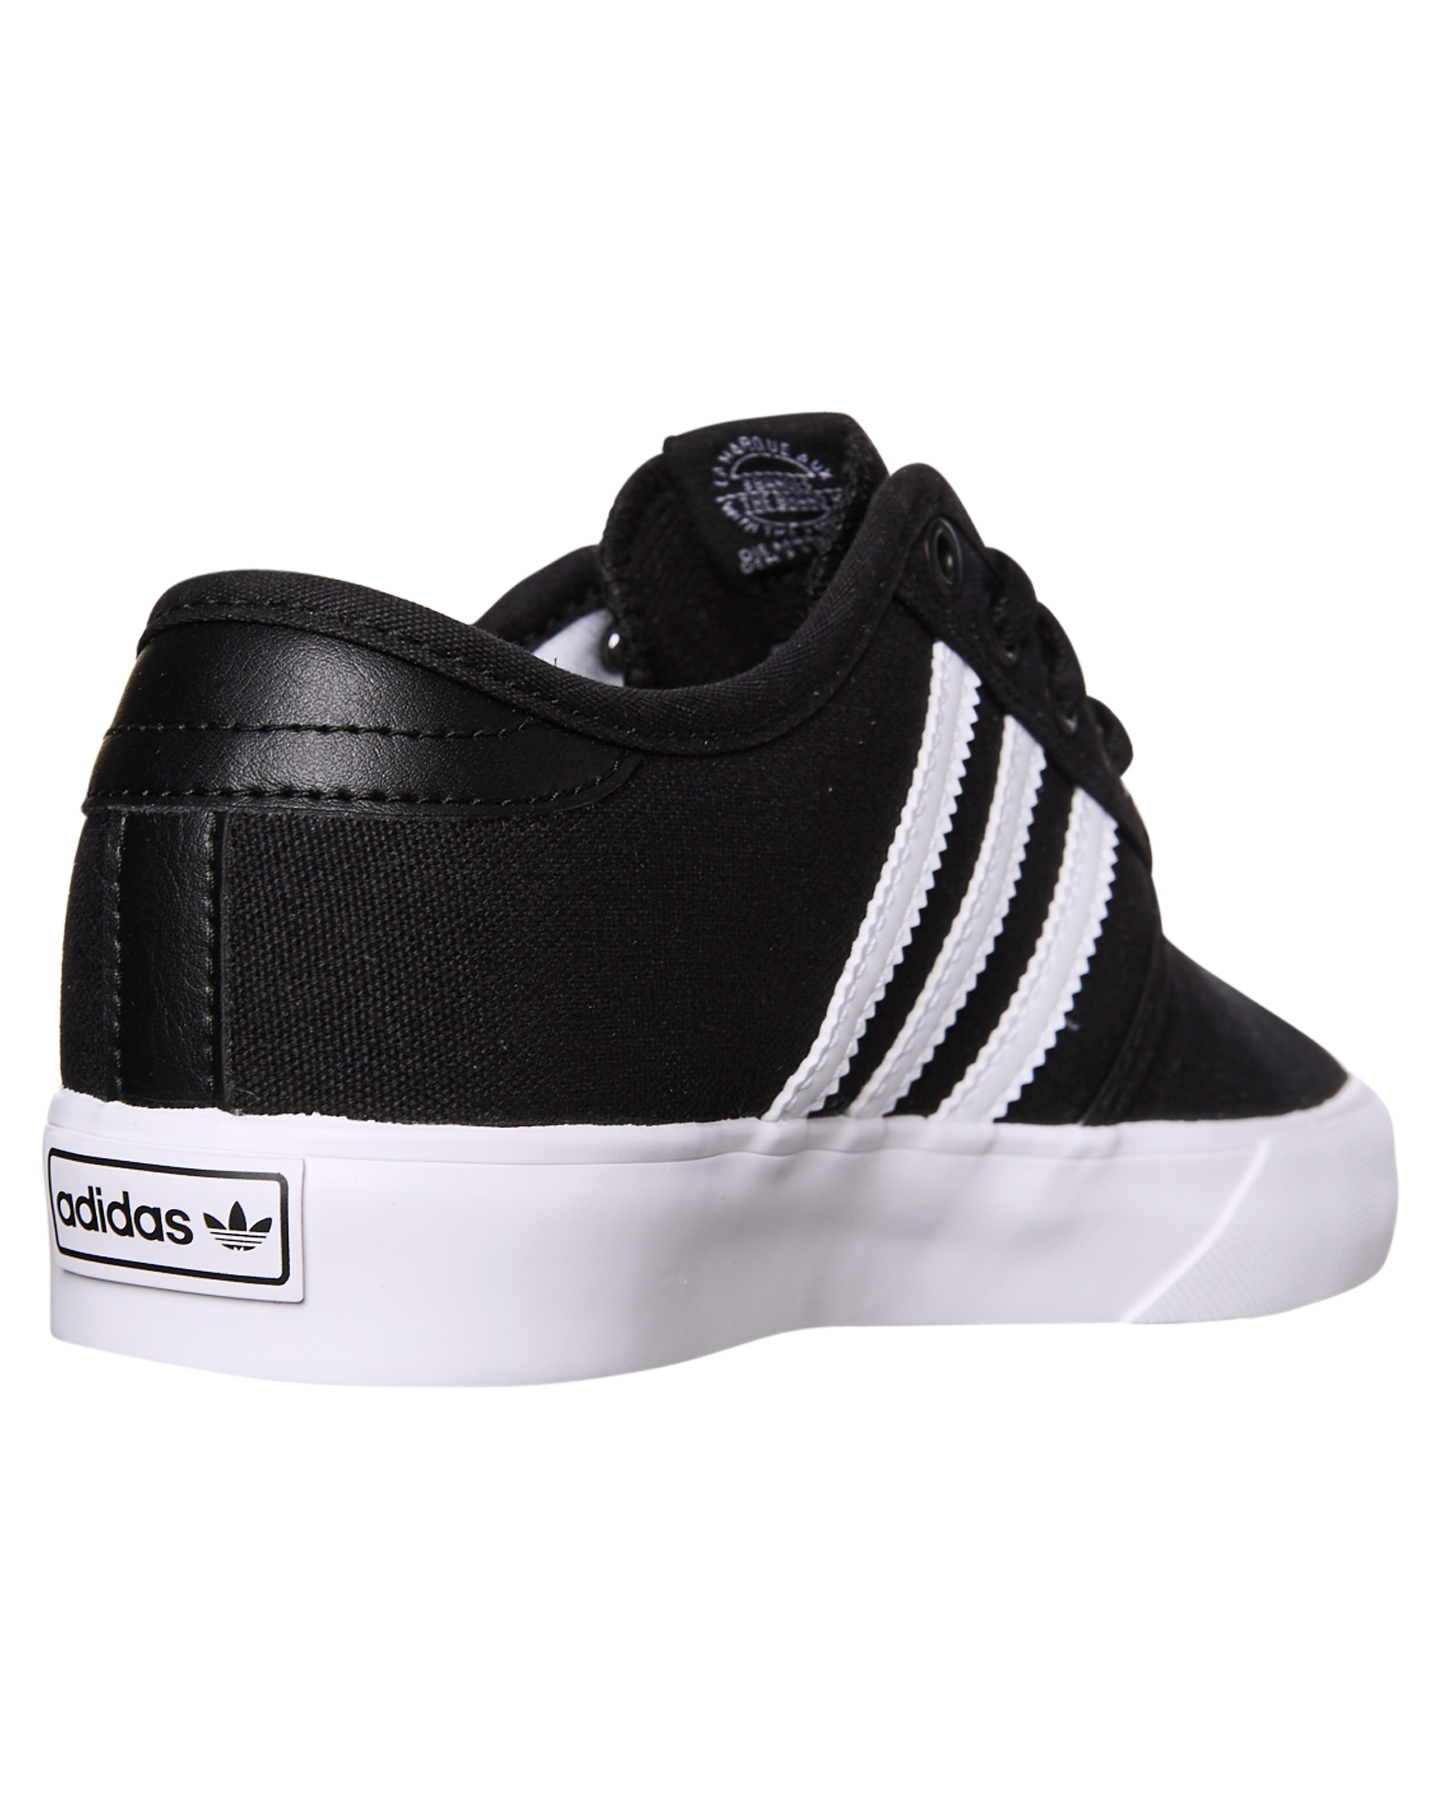 Adidas Kids Seeley Shoe - Black White | SurfStitch